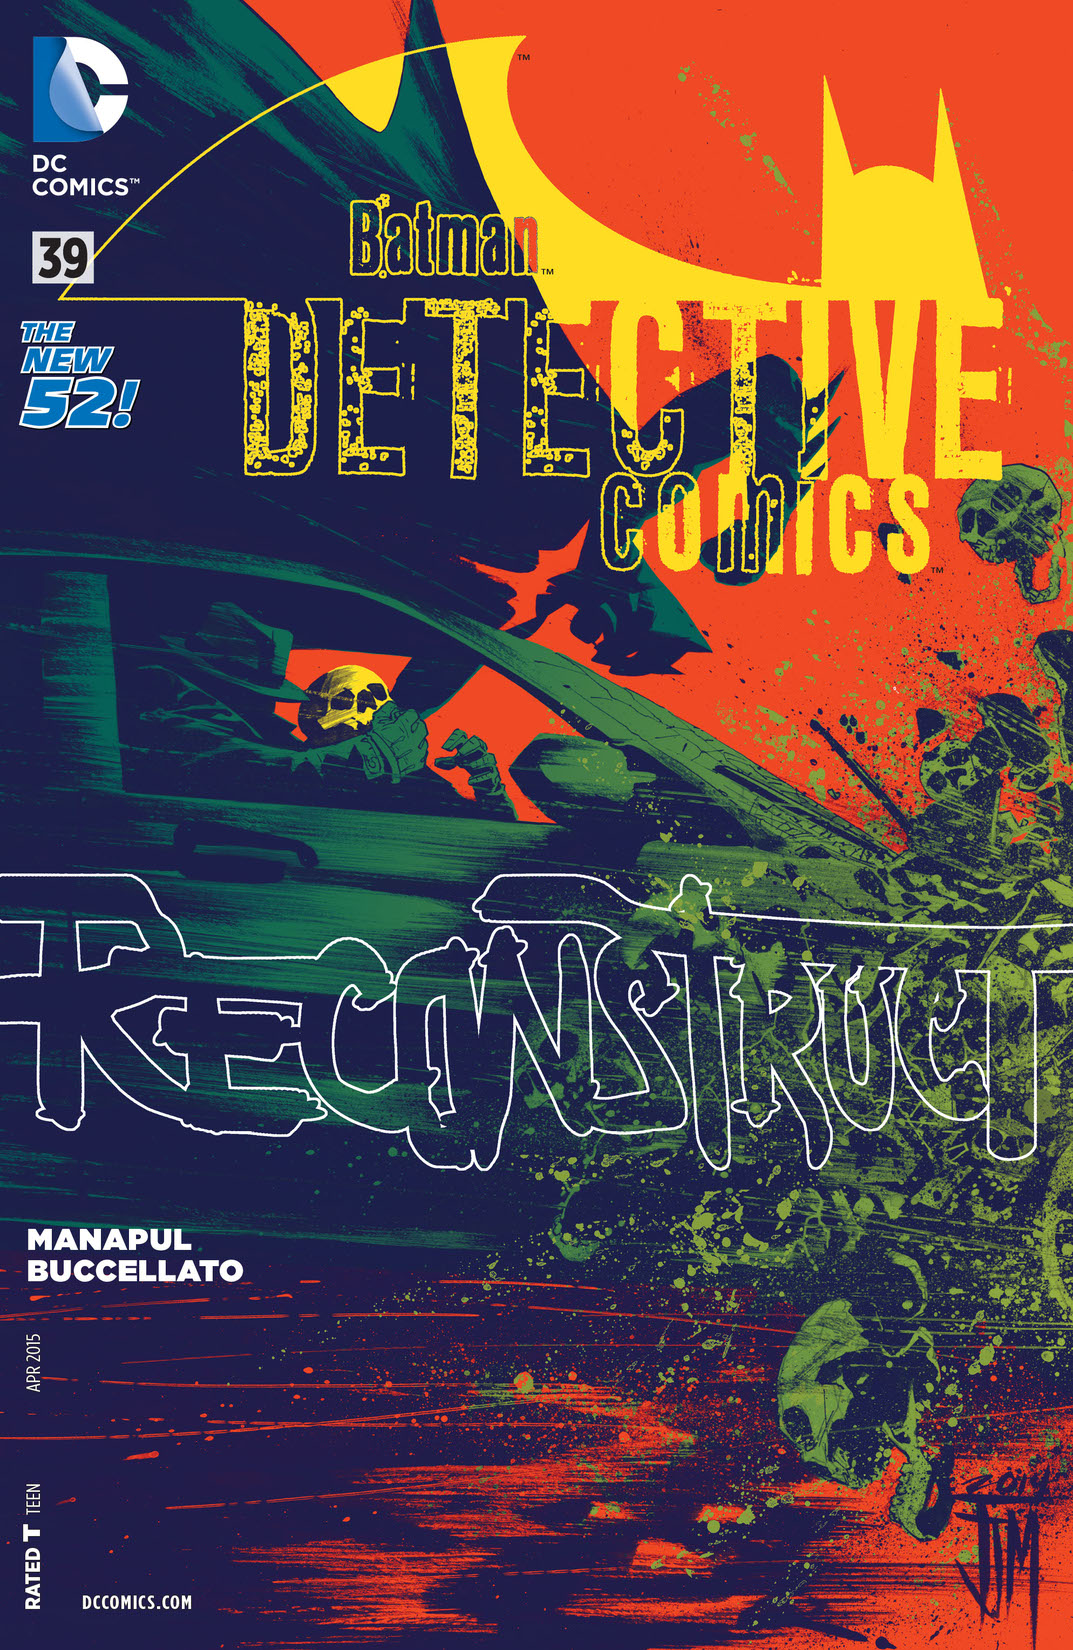 Detective Comics (2011-) #39 preview images